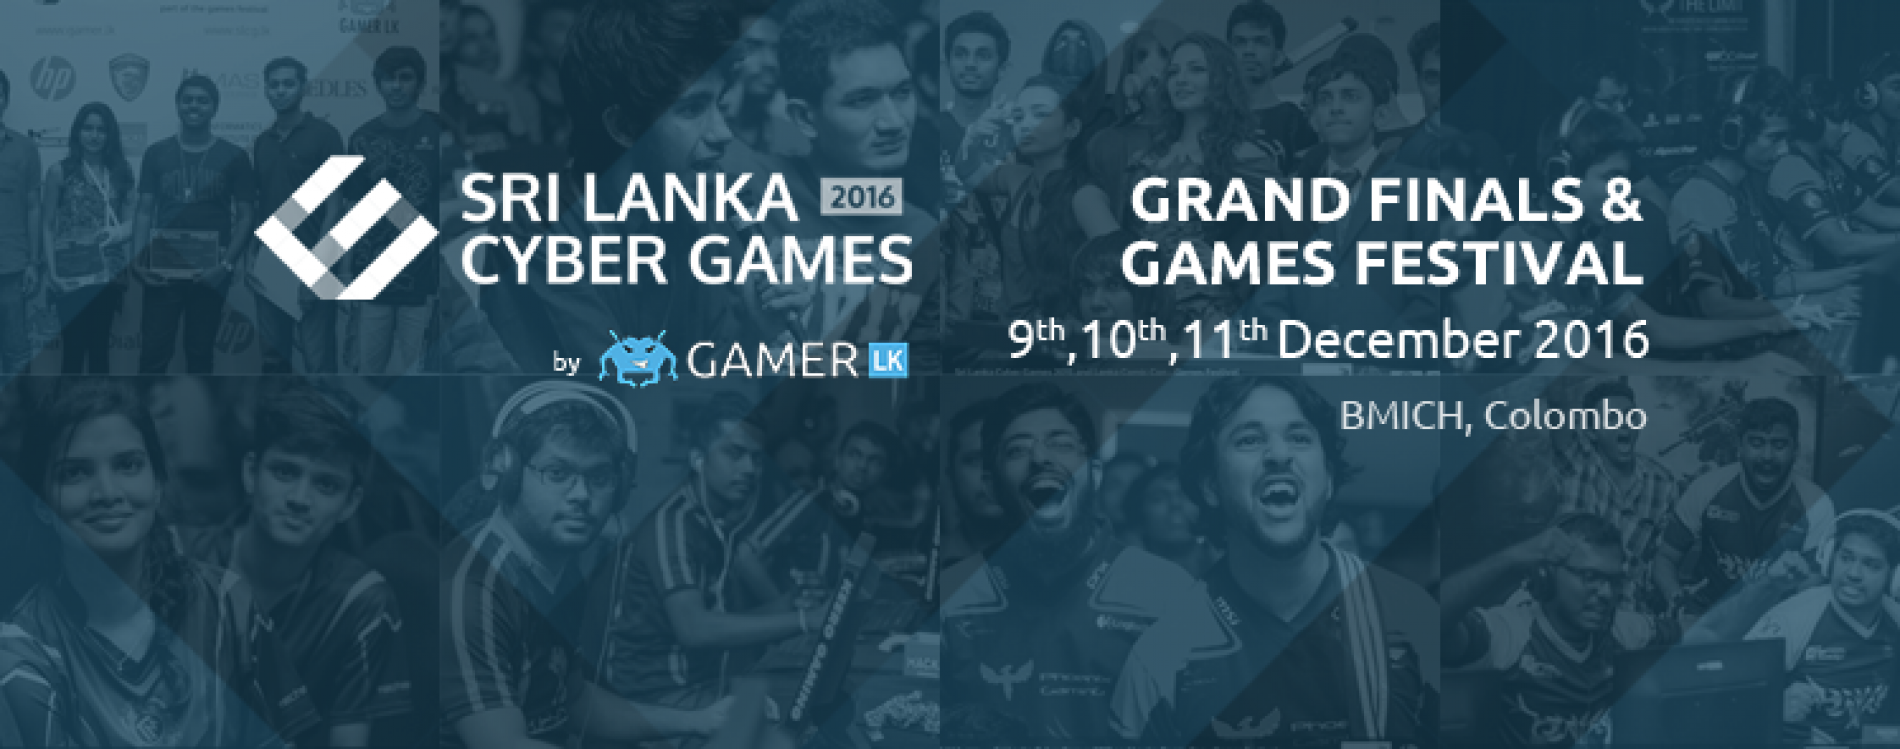 Sri Lanka Cyber Games ’16 – Grand Finals & Games Festival